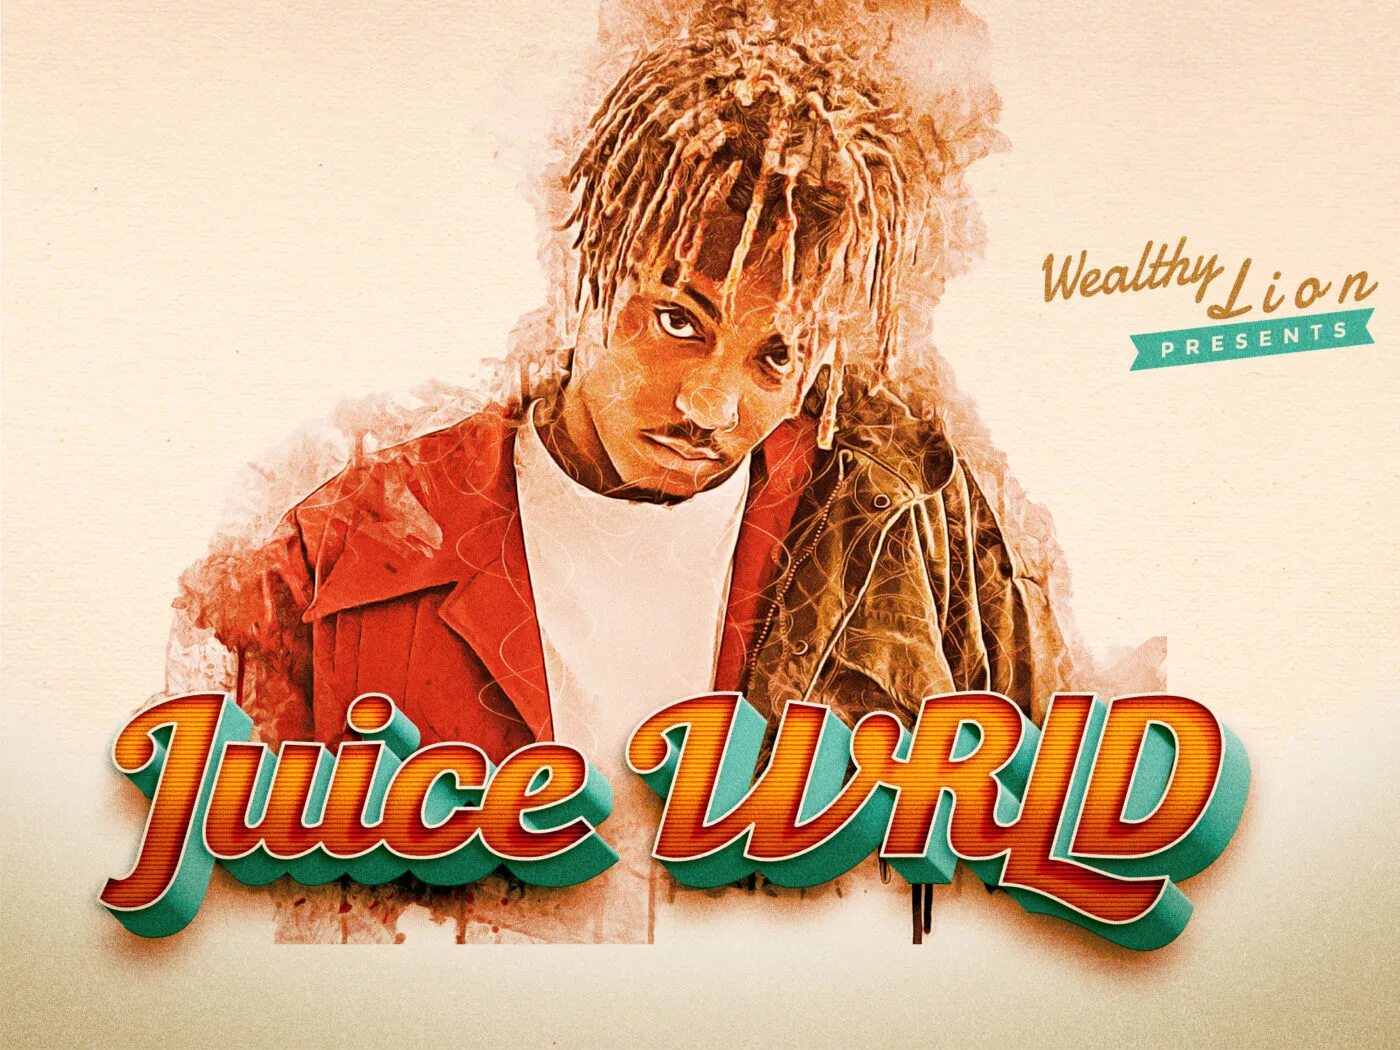 Juicy world. Джуси ворлд. 999 Джус ворлд. 999 Juice World. Juice World лого.